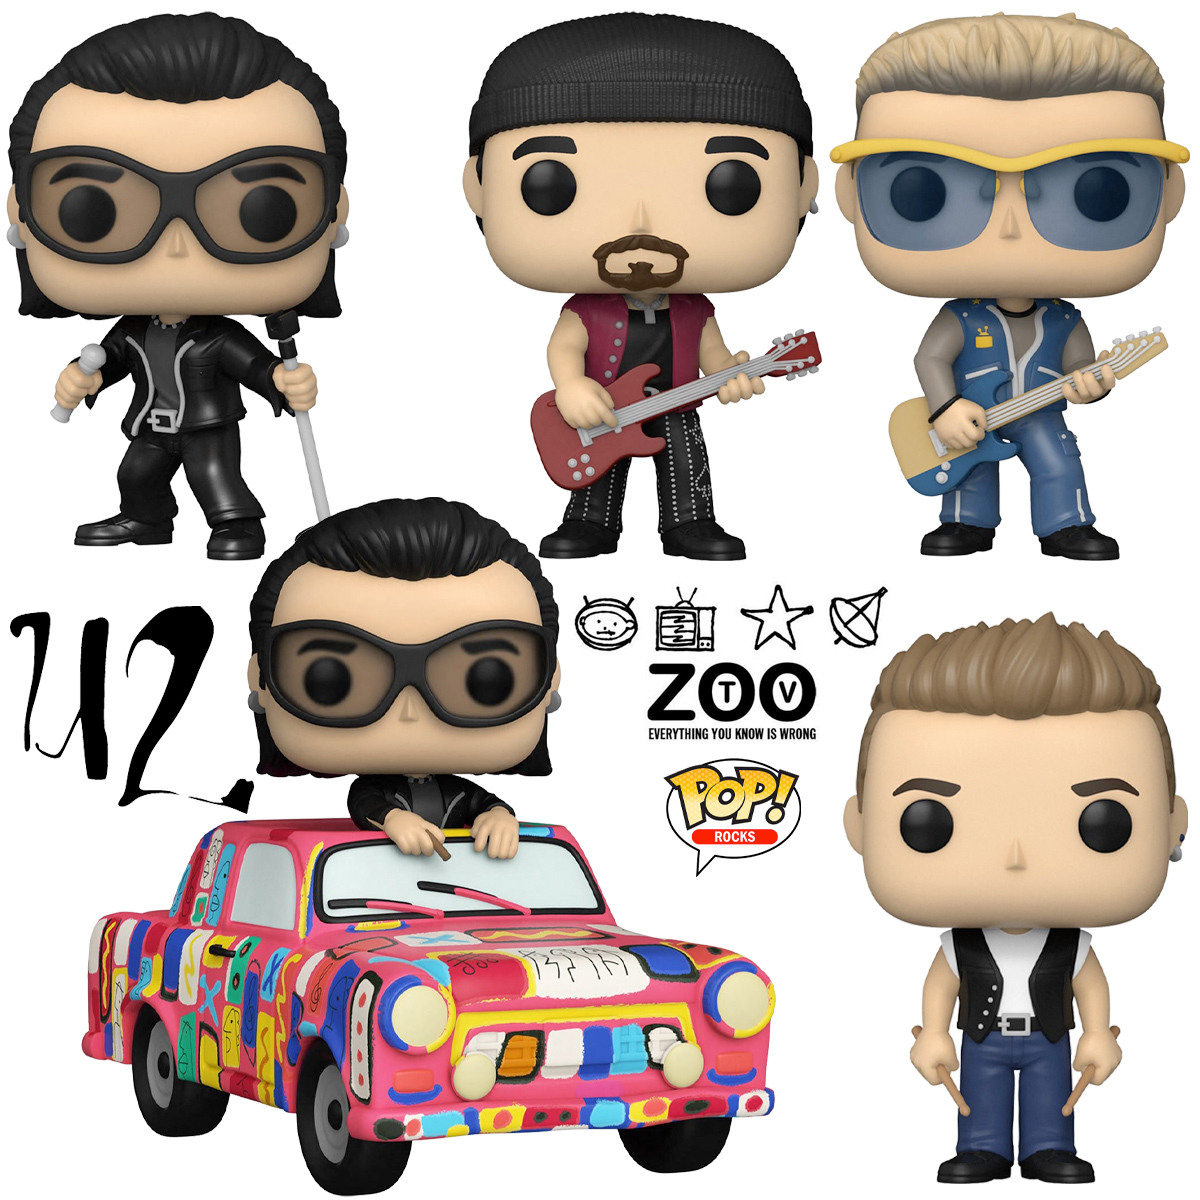 Bonecos Pop! Rocks U2 Zoo TV e Carro Achtung Baby Pop! Rides